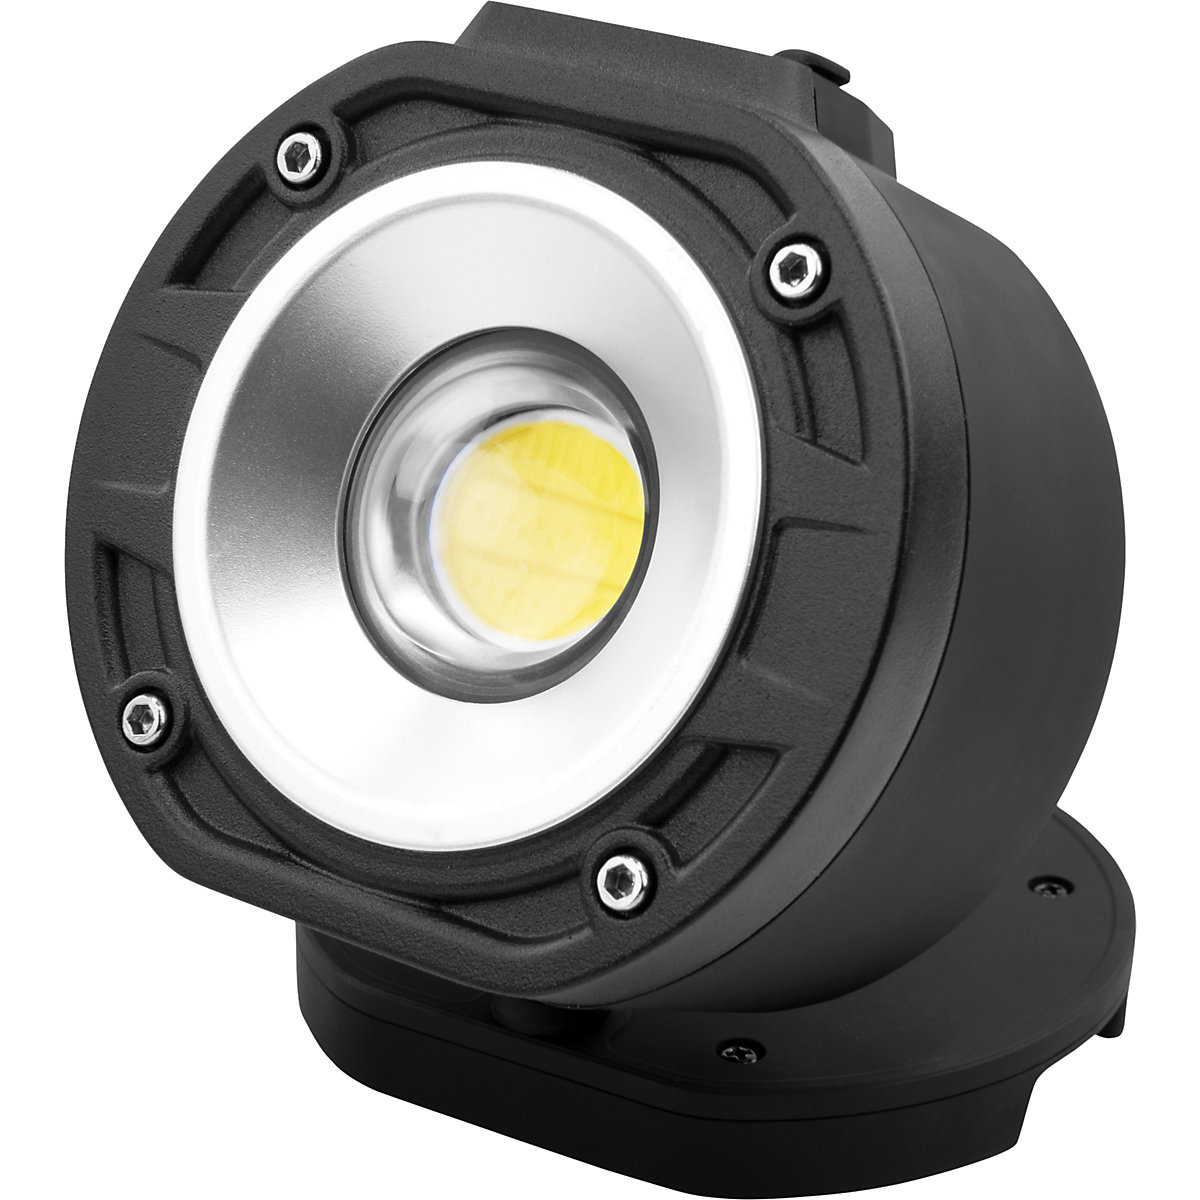 Lampada da lavoro a LED ricaricabile FL1100R – Ansmann: 1100 lm, nero